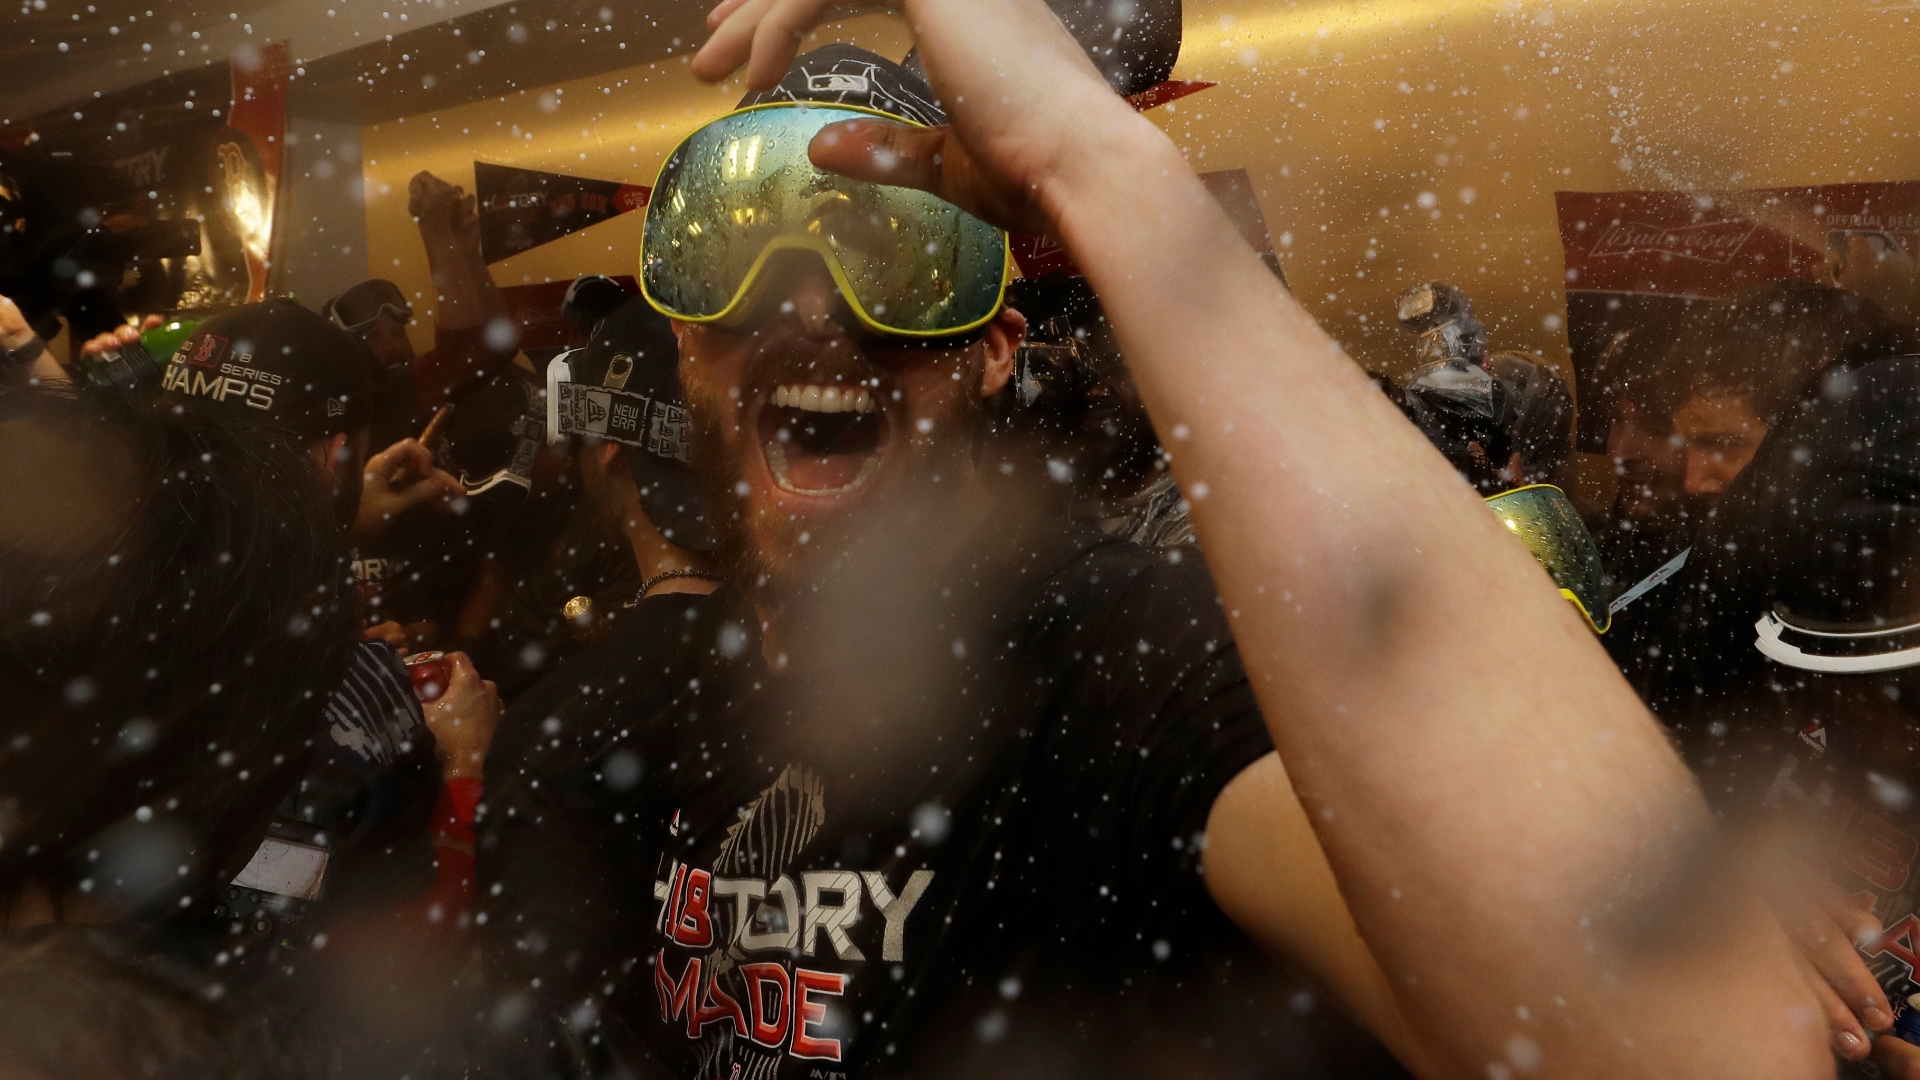 Recent World Series winners had good chemistry - The Boston Globe